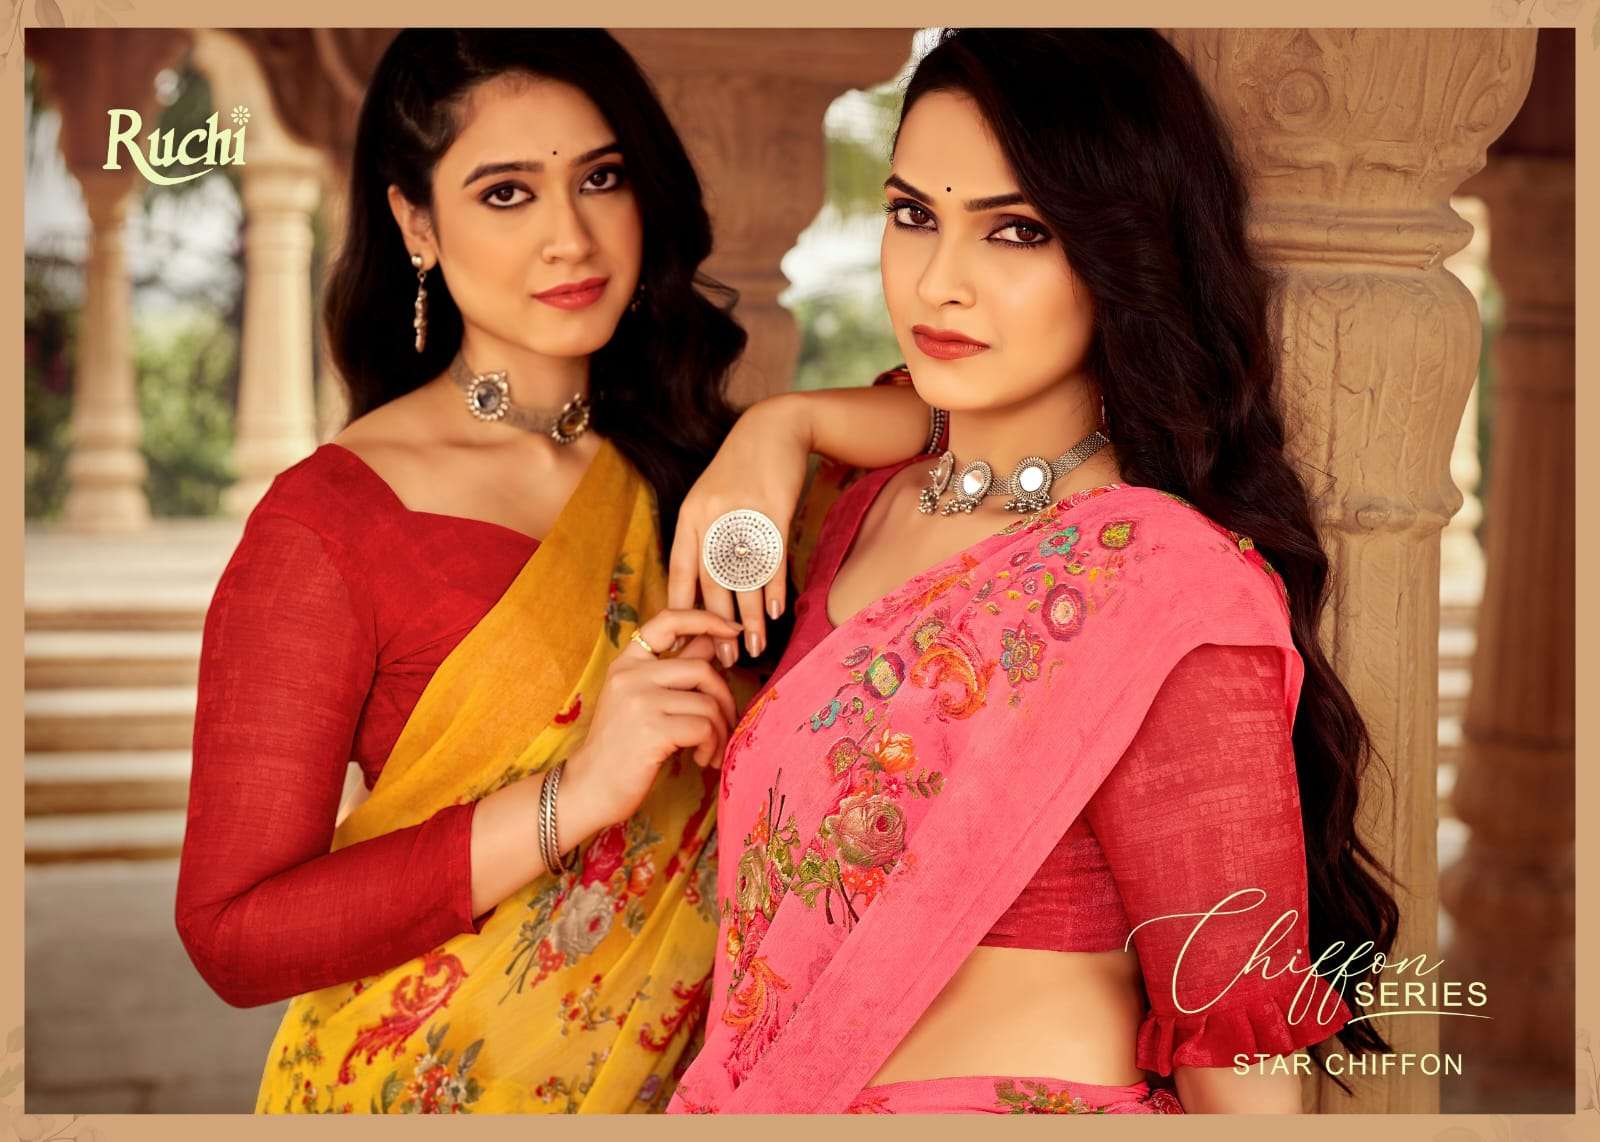 Ruchi Saree Star Chiffon 152nd Edition Printed Chiffon Saree Dealers